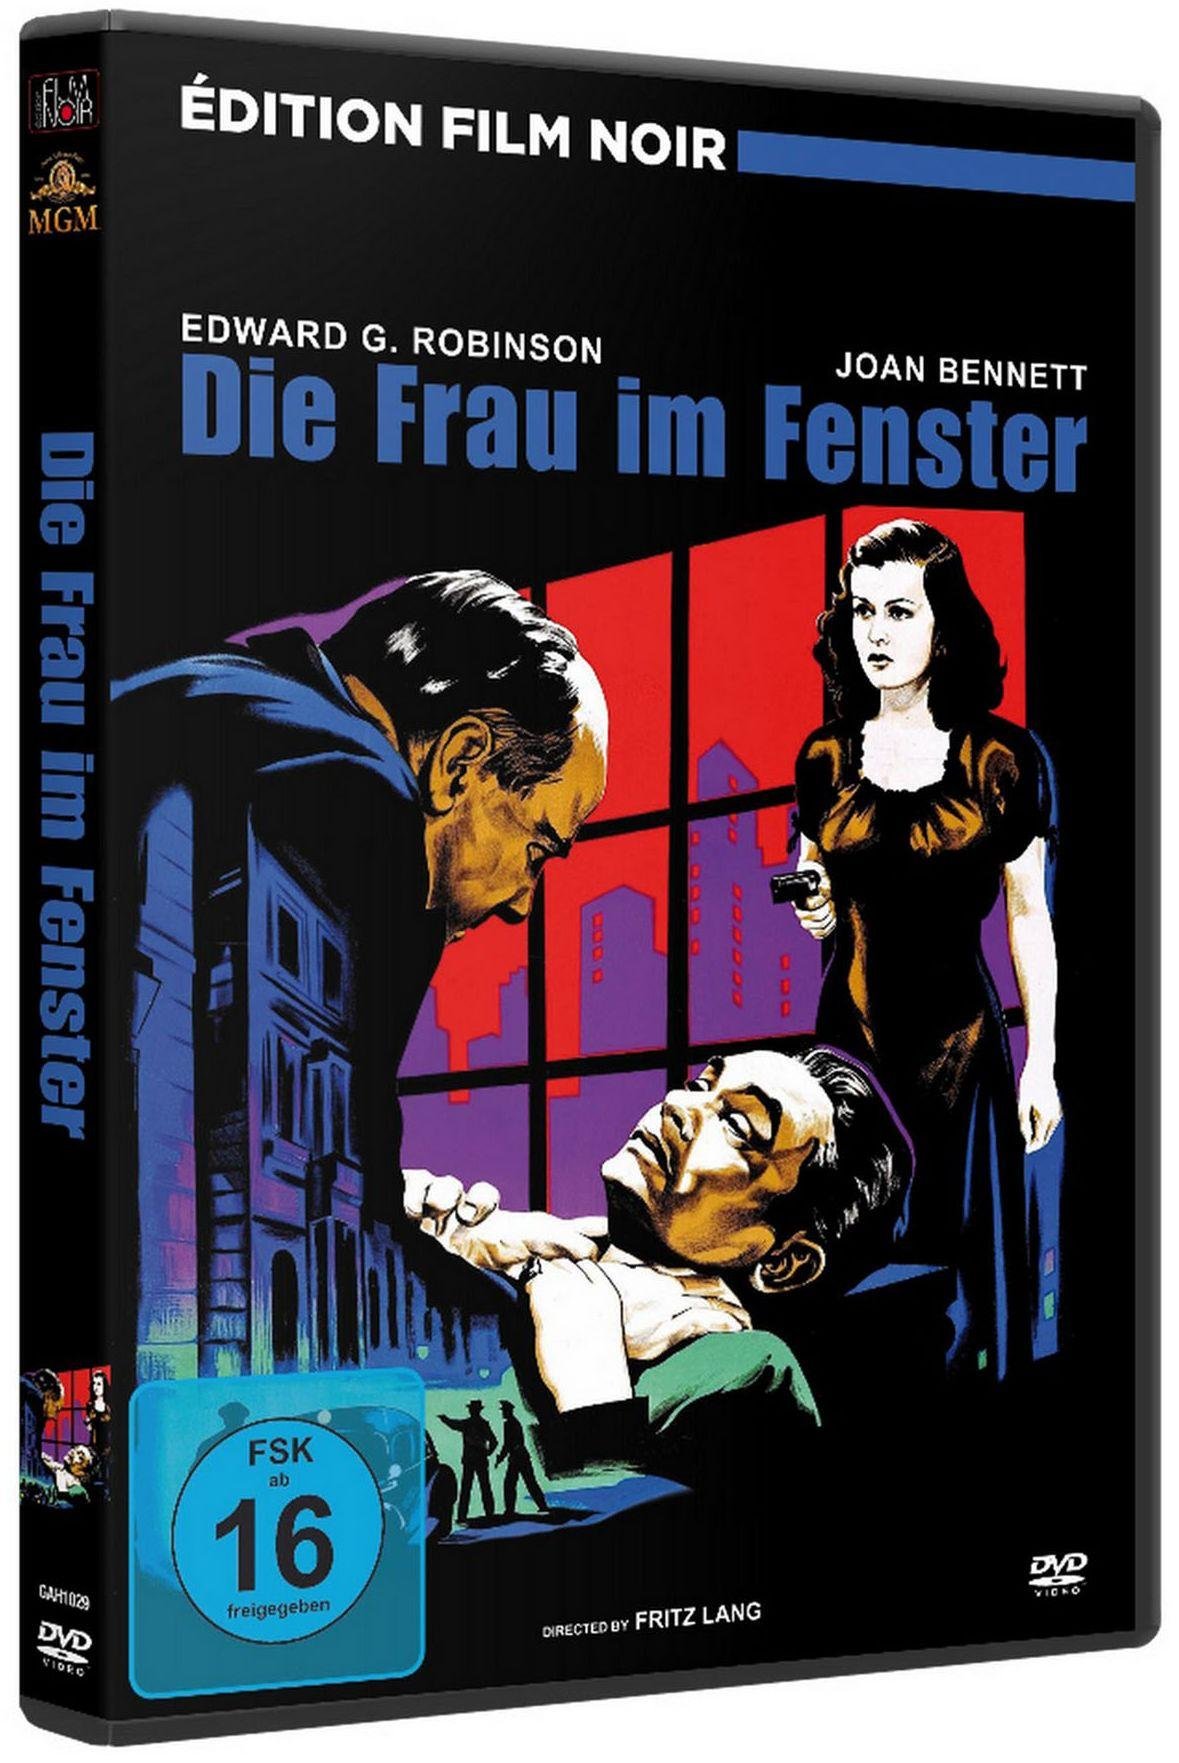 Die Frau im Fenster - Film Noir Edition (digital remastered)  (DVD)